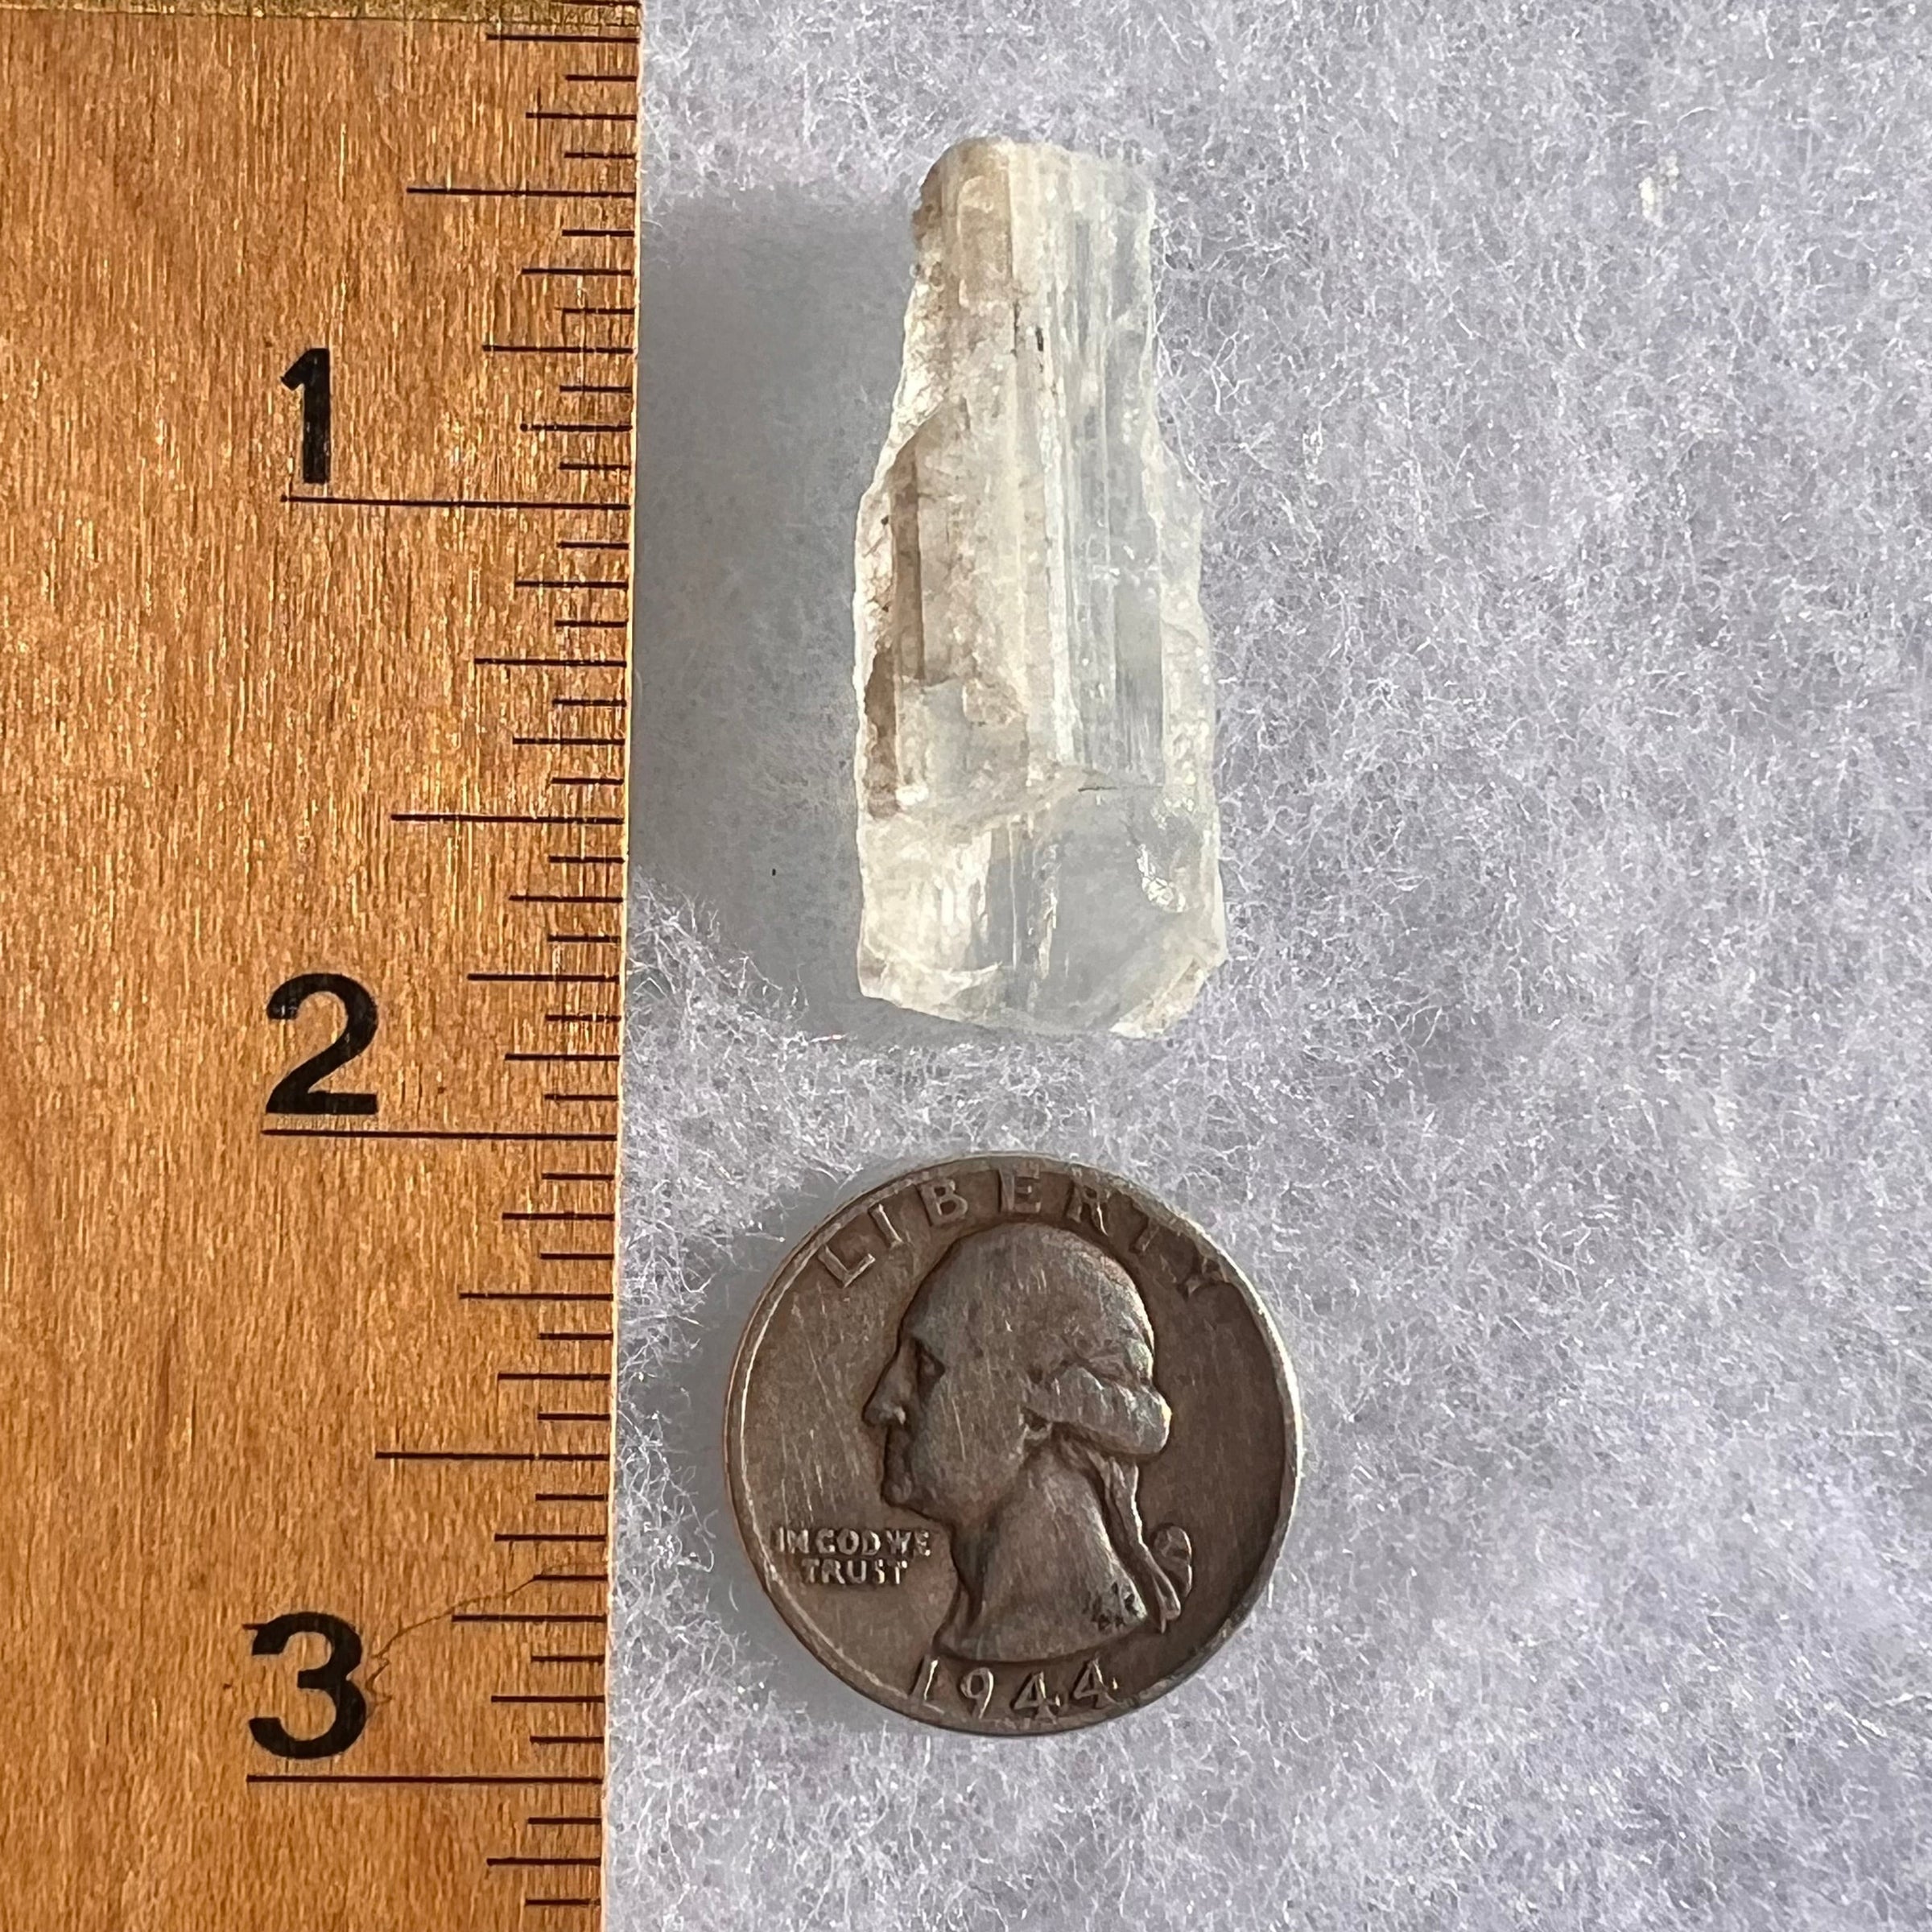 Petalite Crystal "Stone of the Angels" #20-Moldavite Life